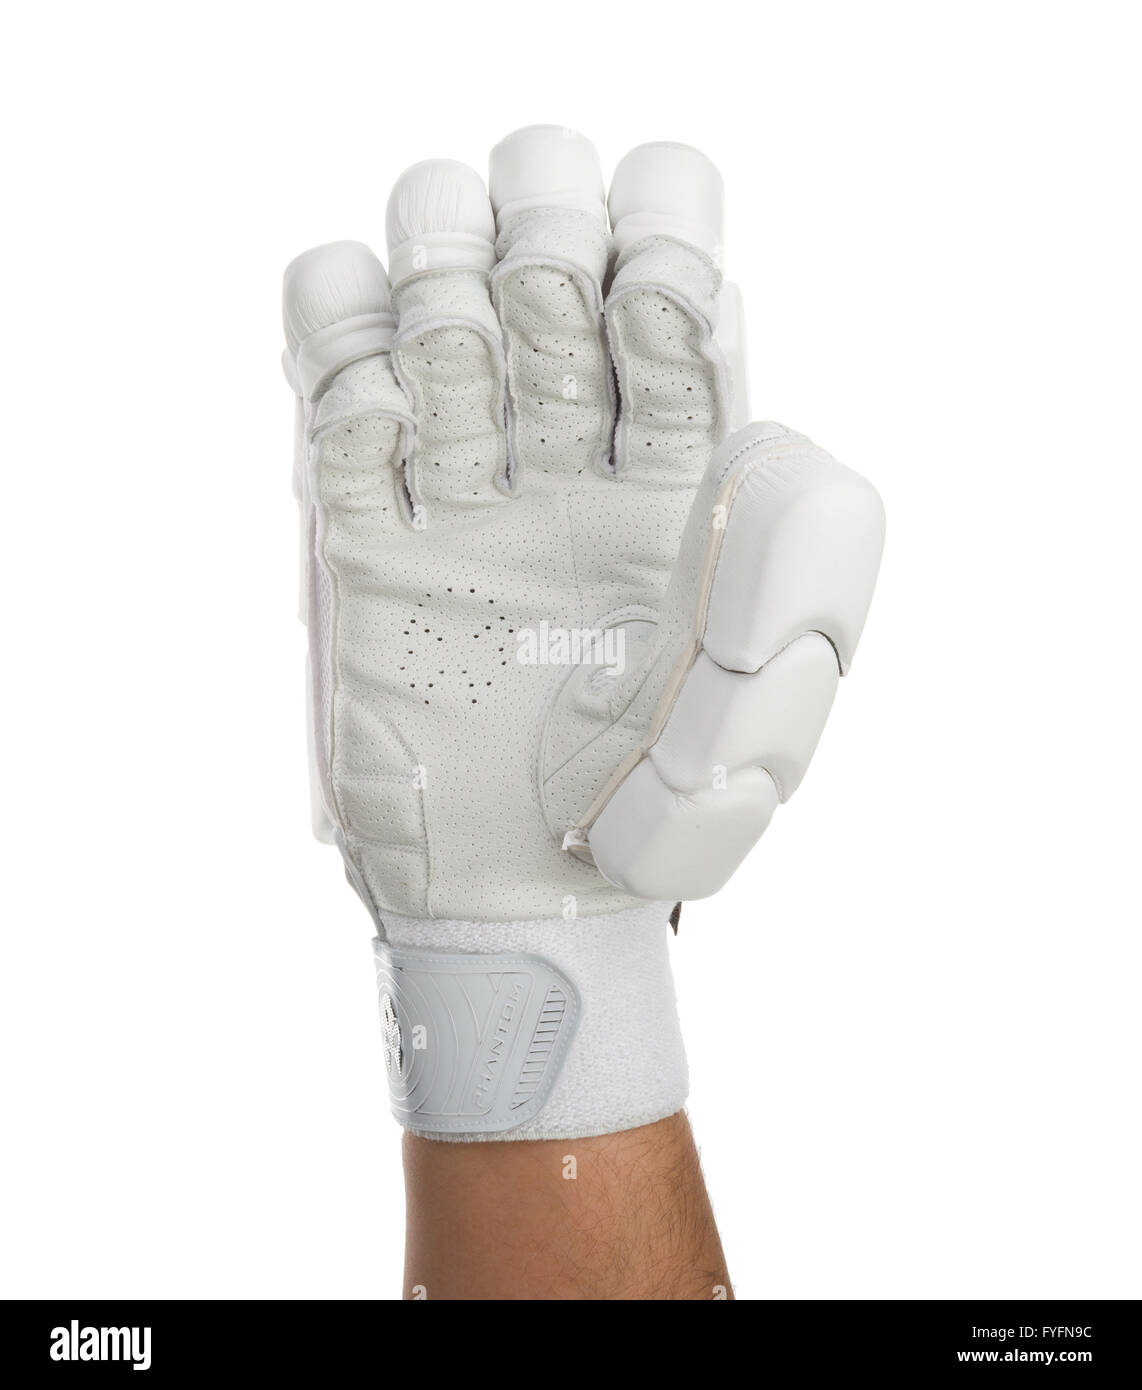 Cricket gloves. Hand protection. Sportswear Stock Photo - Alamy